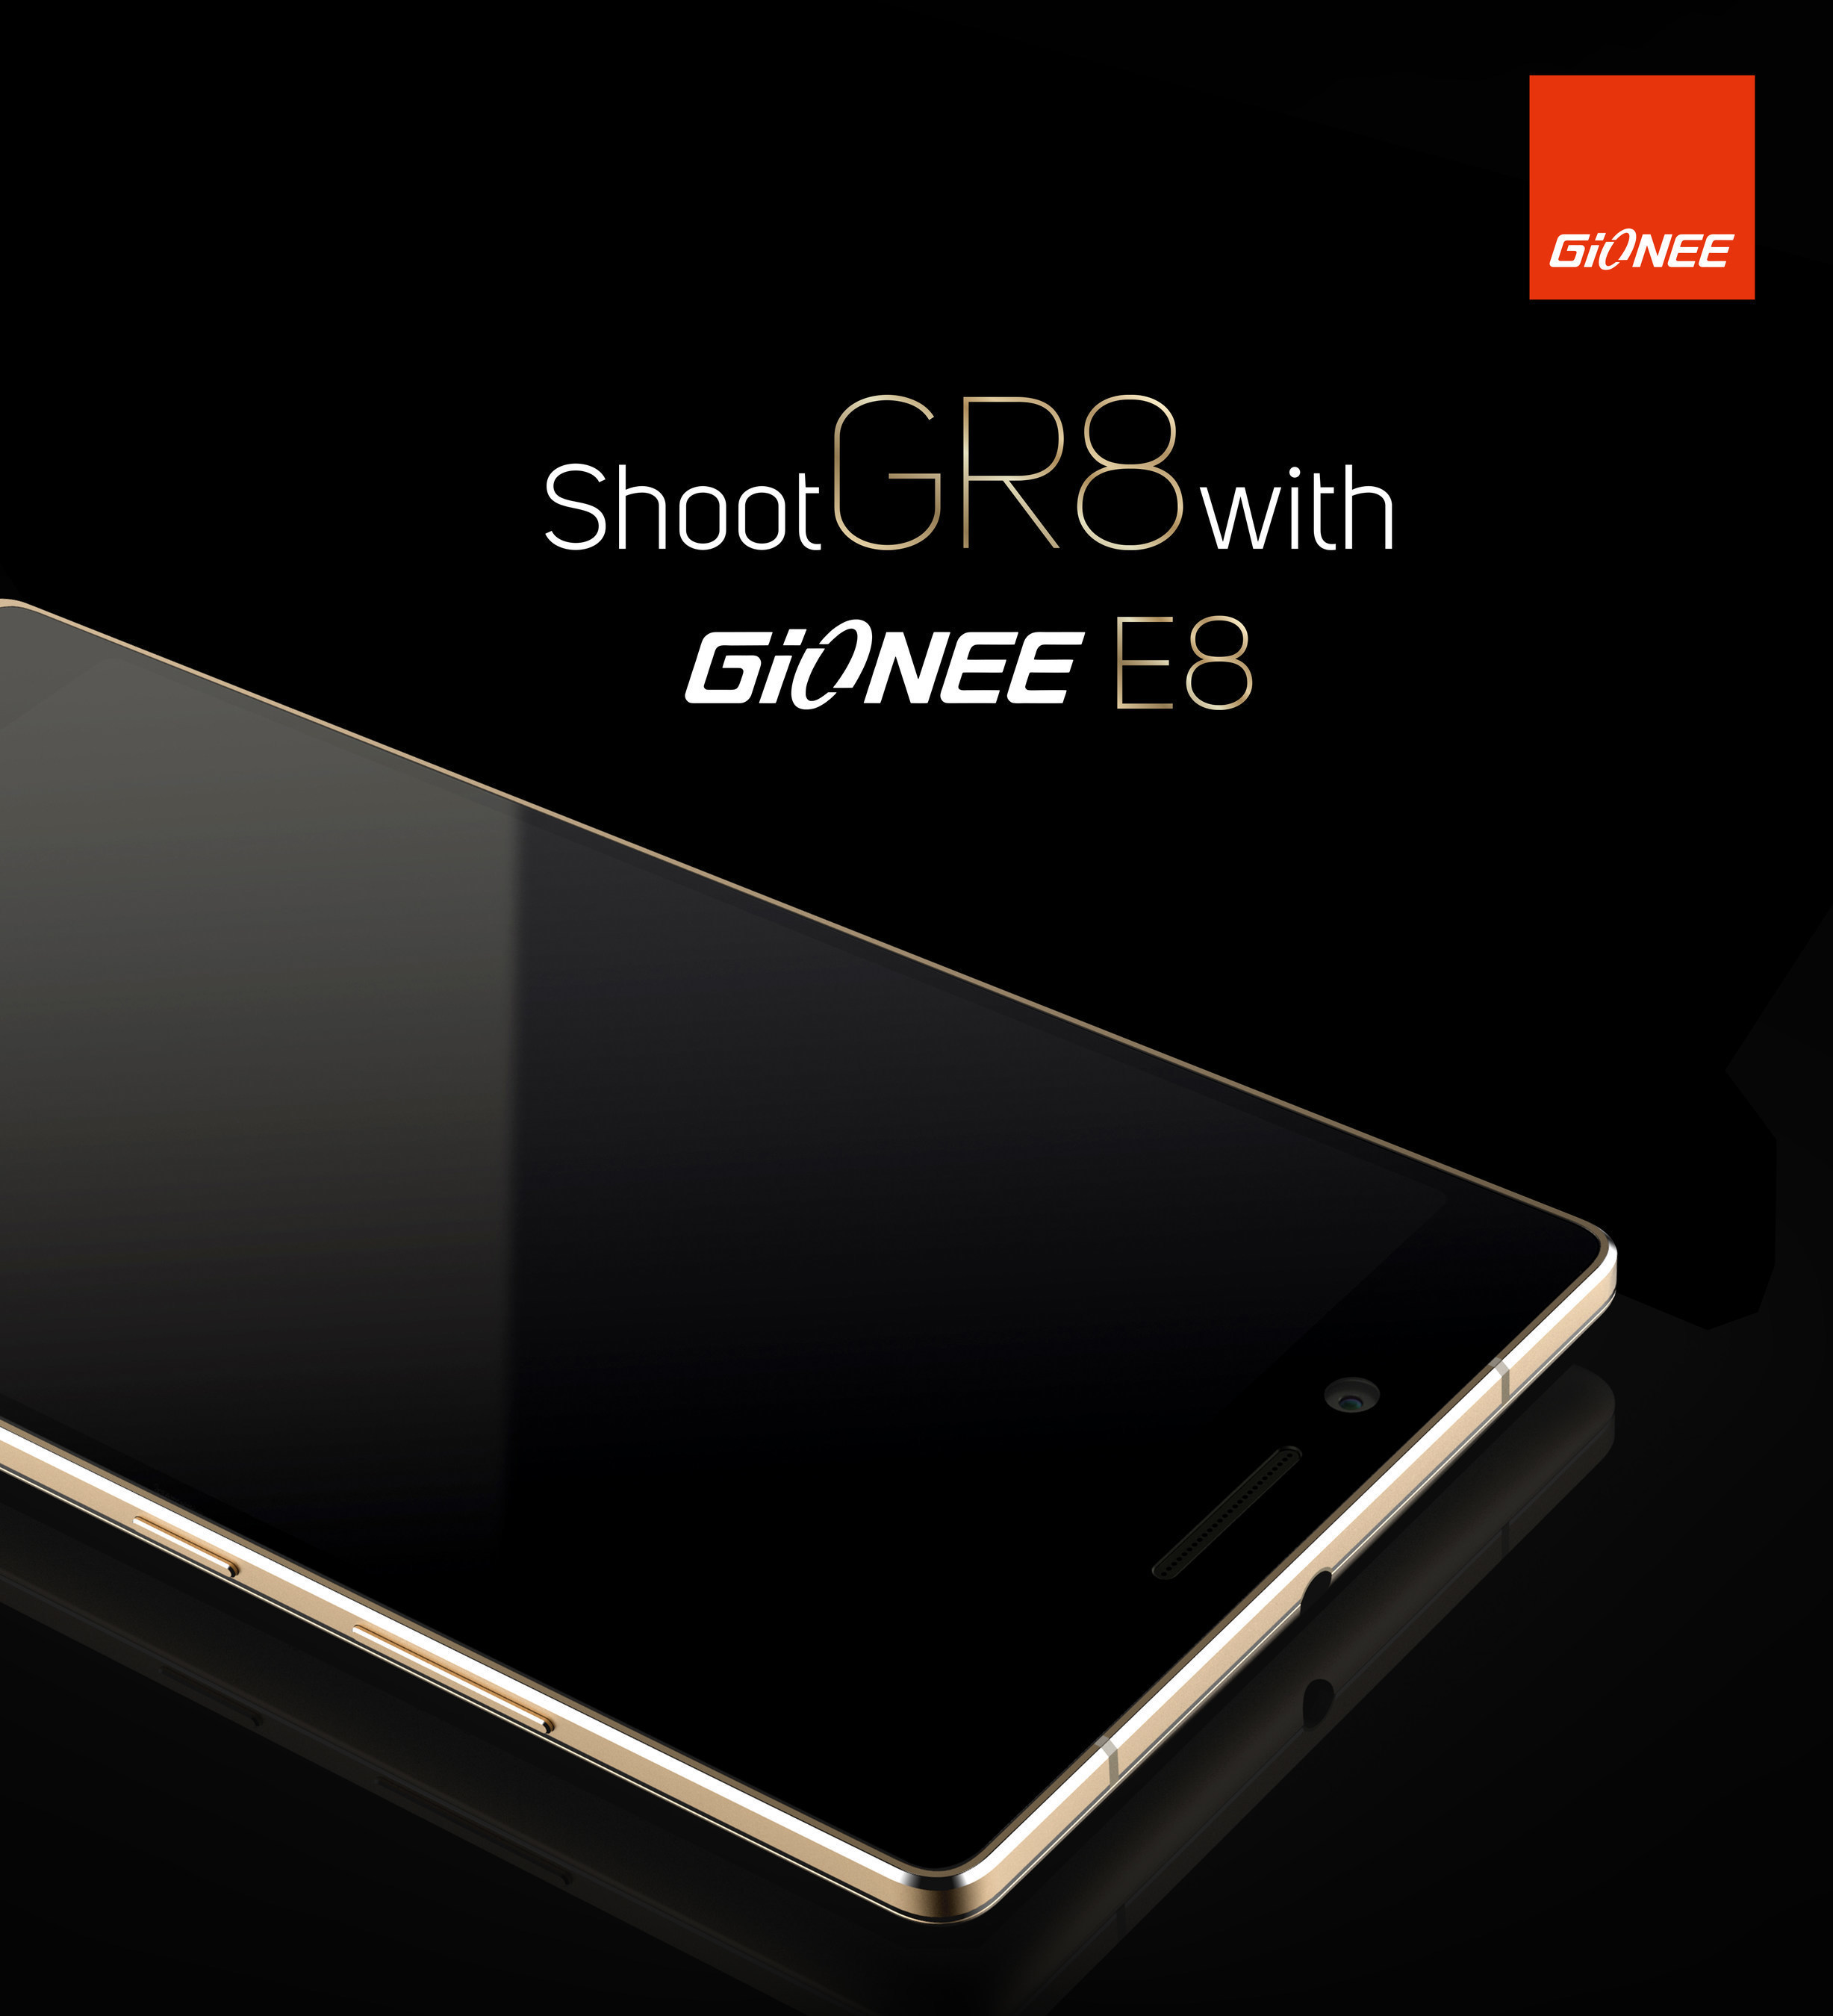 Gionee new flagship smartphone Elife E8